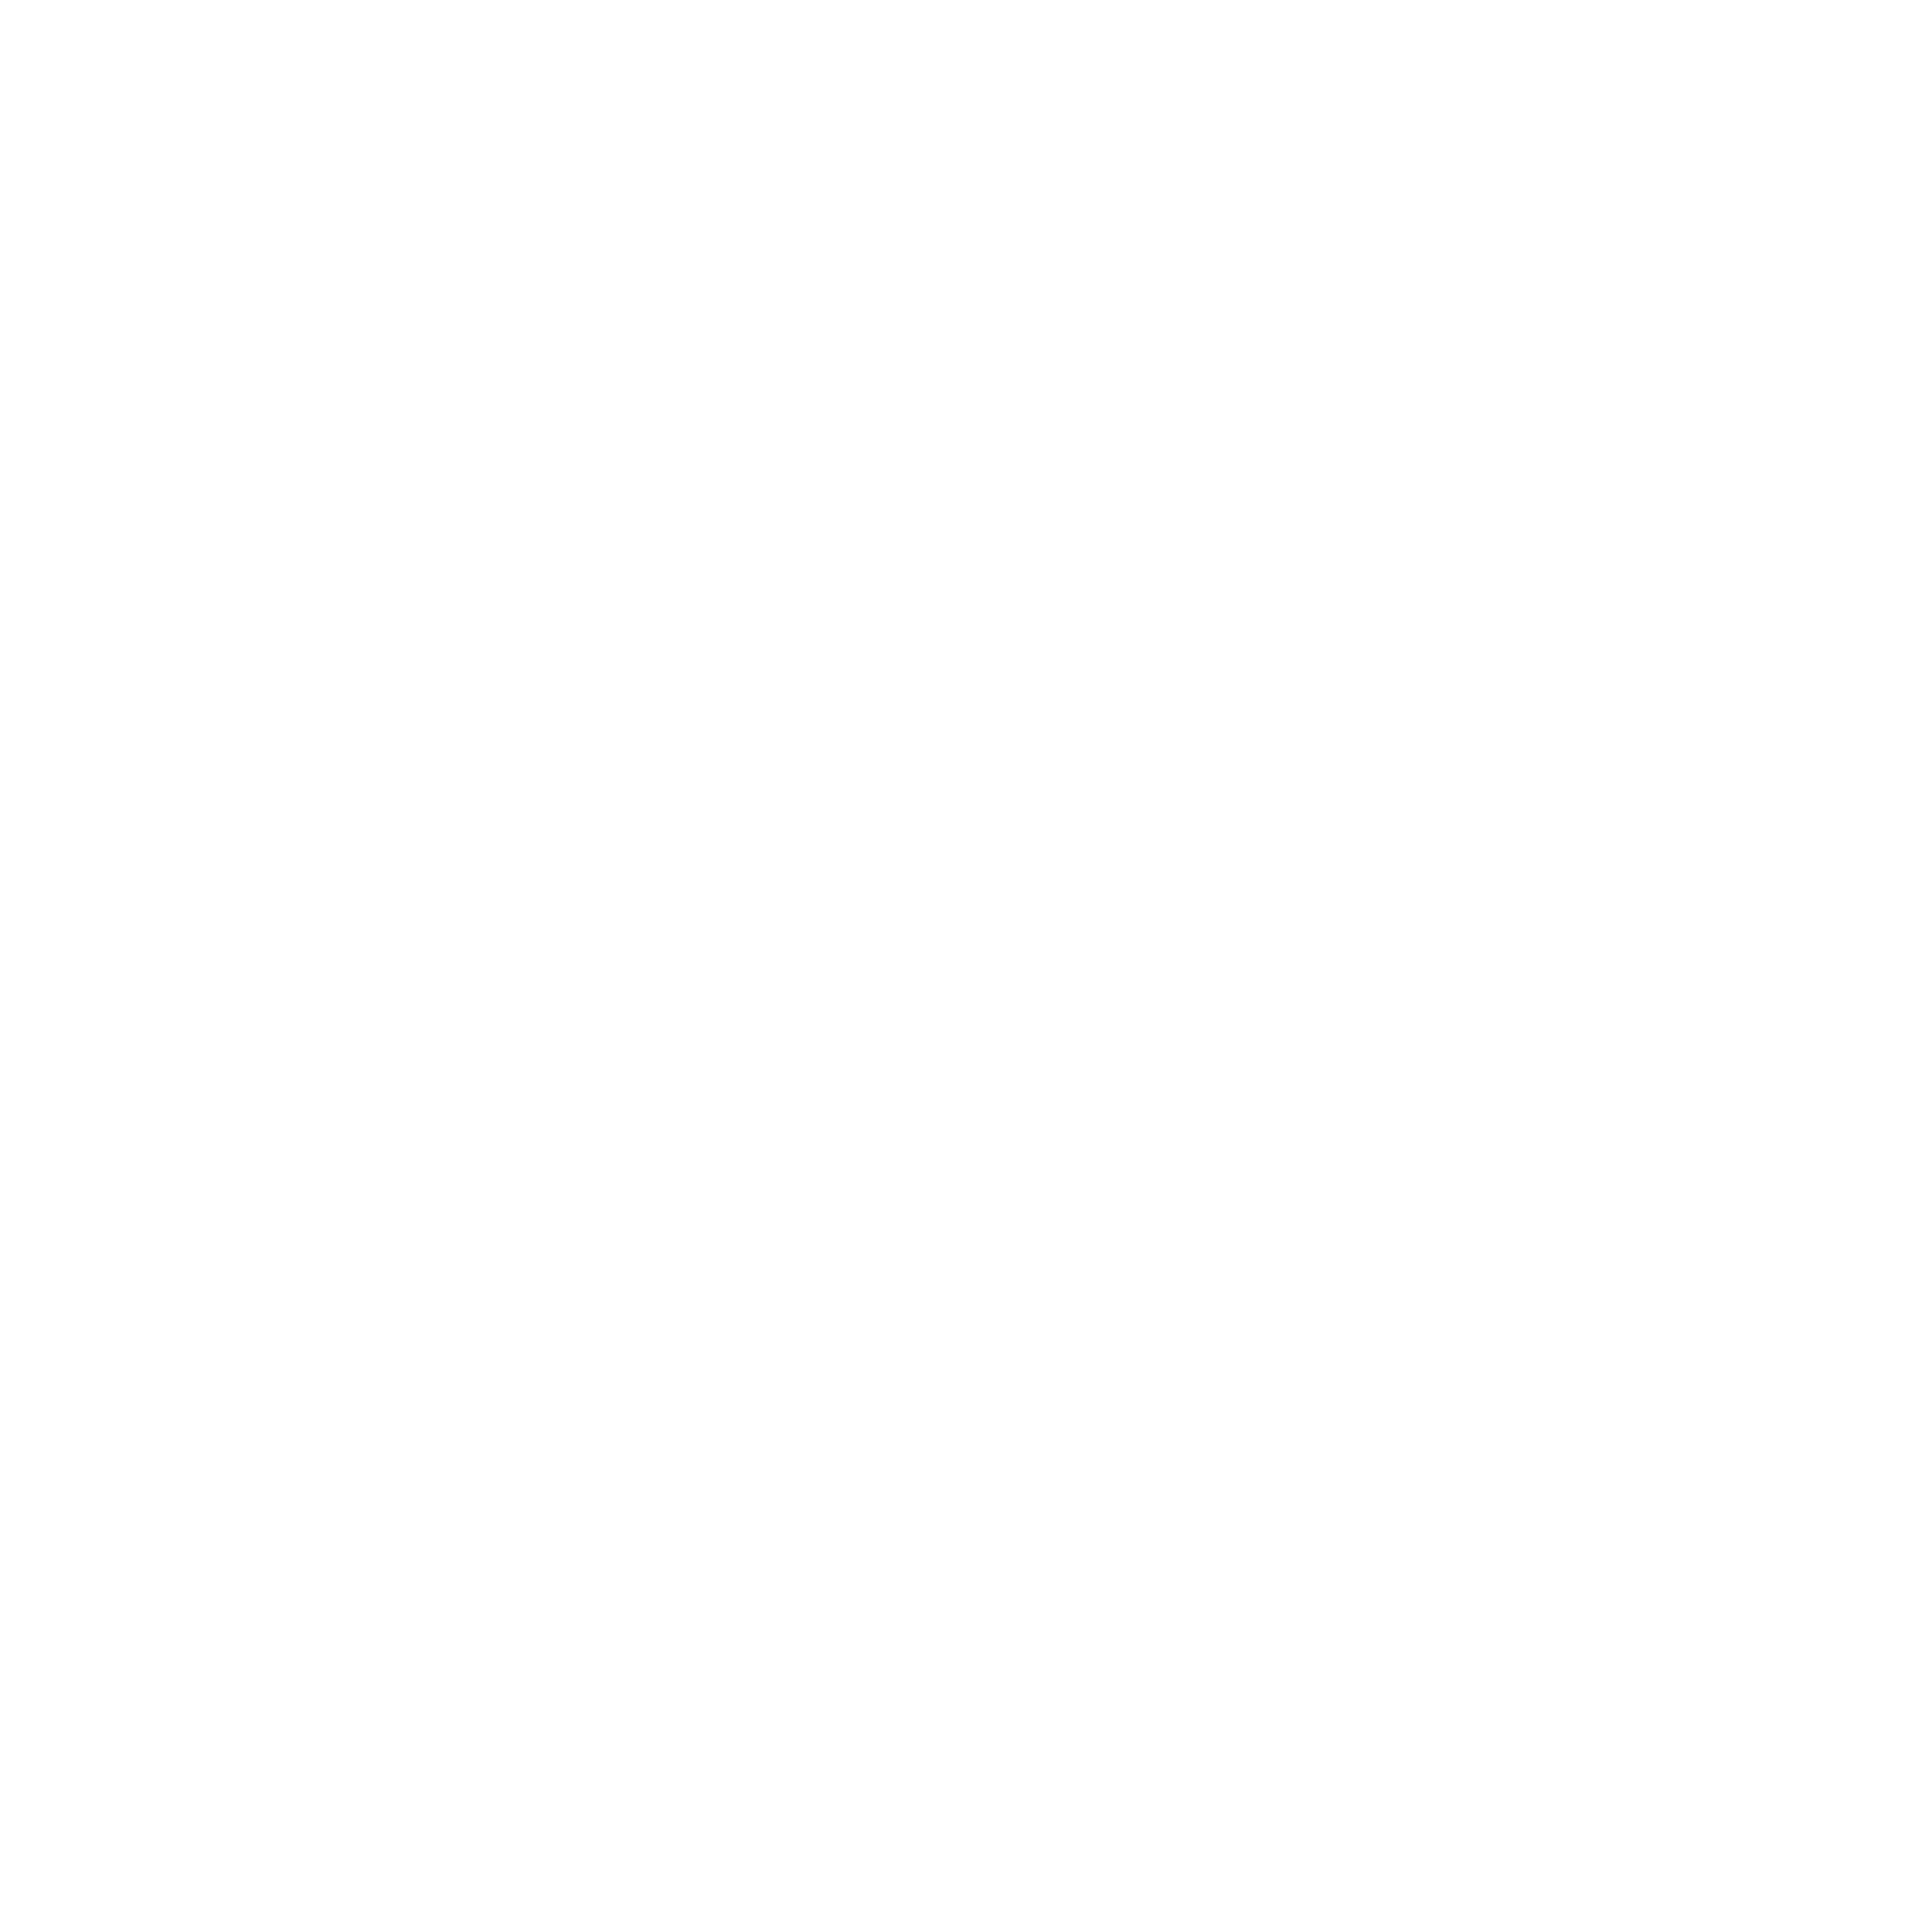 RGRAPHIC STUDIO